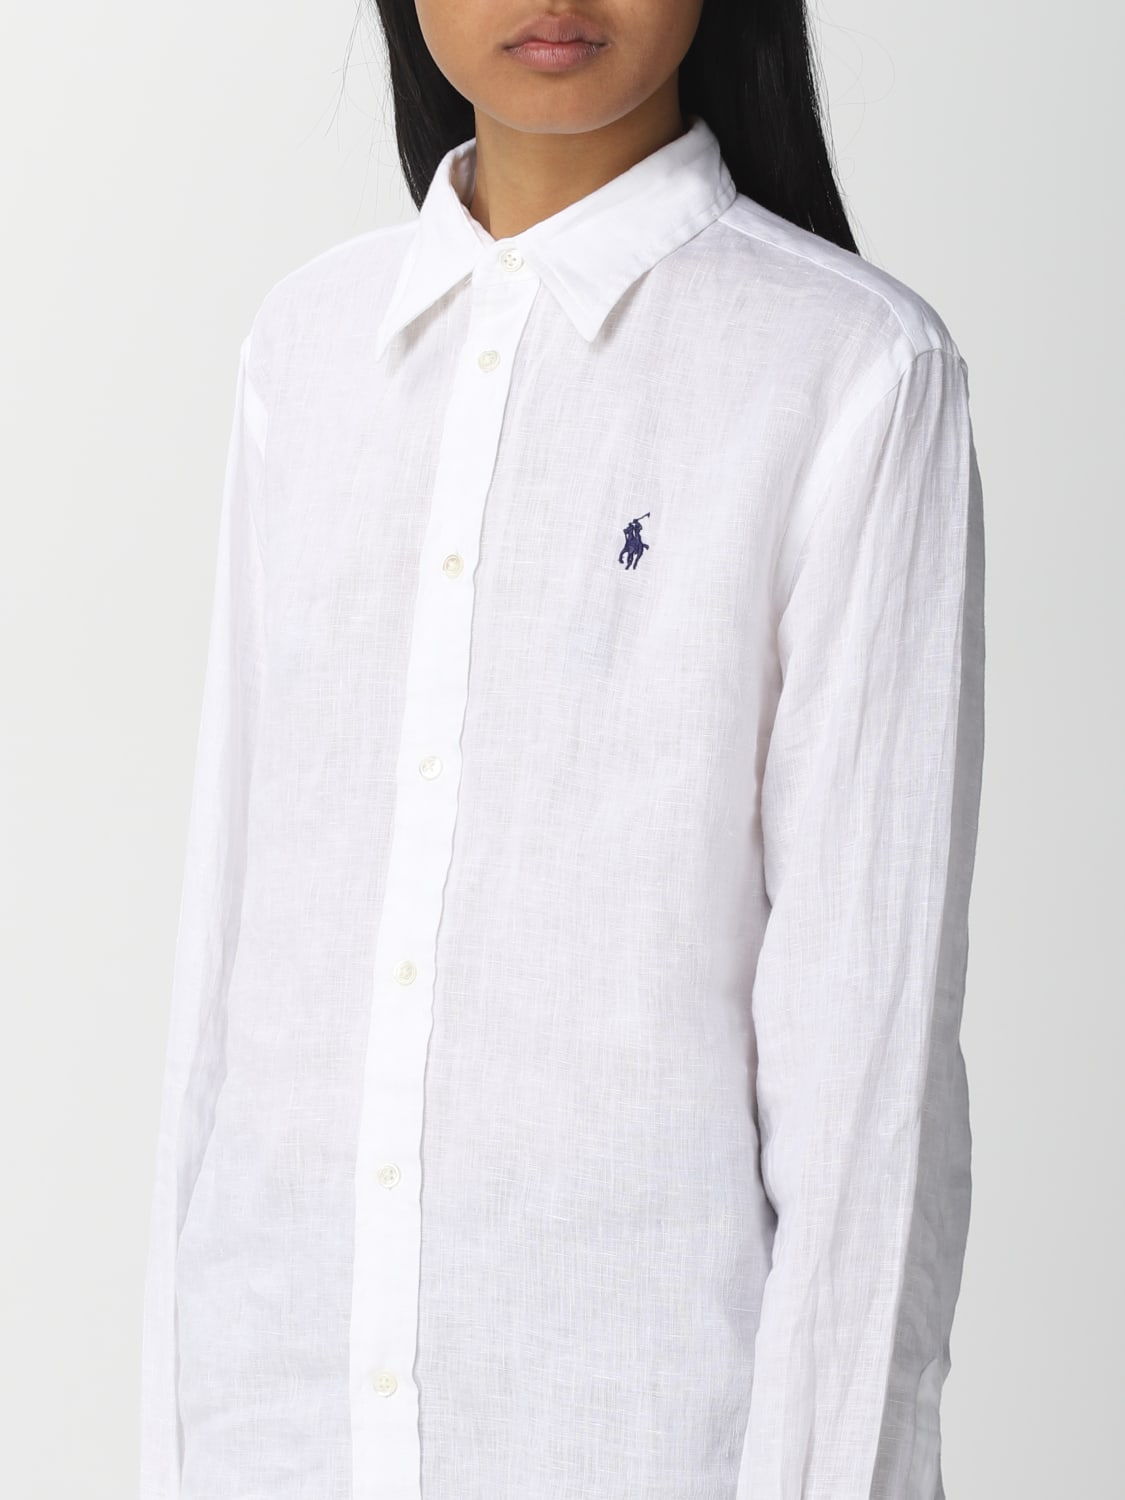 RALPH LAUREN: Camisa para Blanco | Camisa Polo Ralph Lauren en línea en GIGLIO.COM